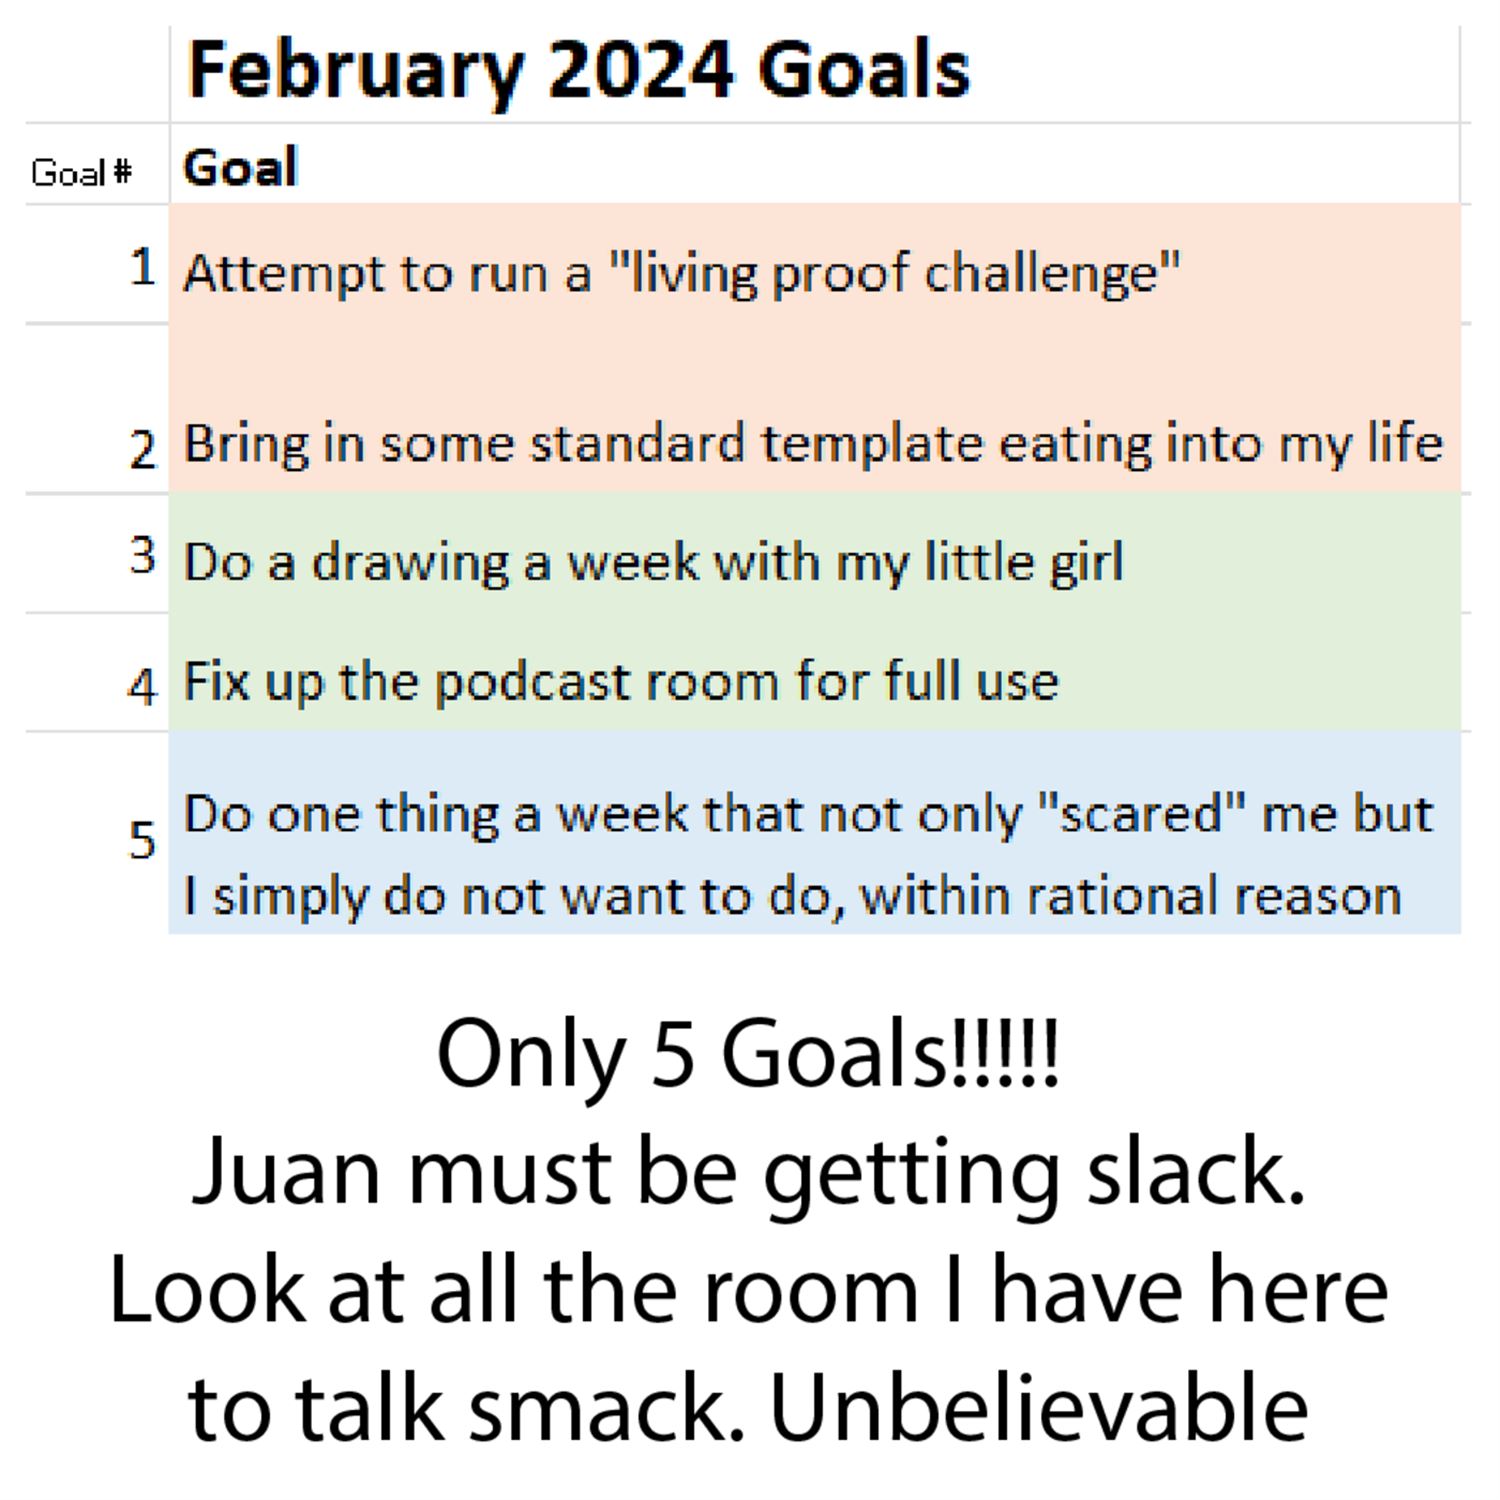 Juan's February 2024 Goals